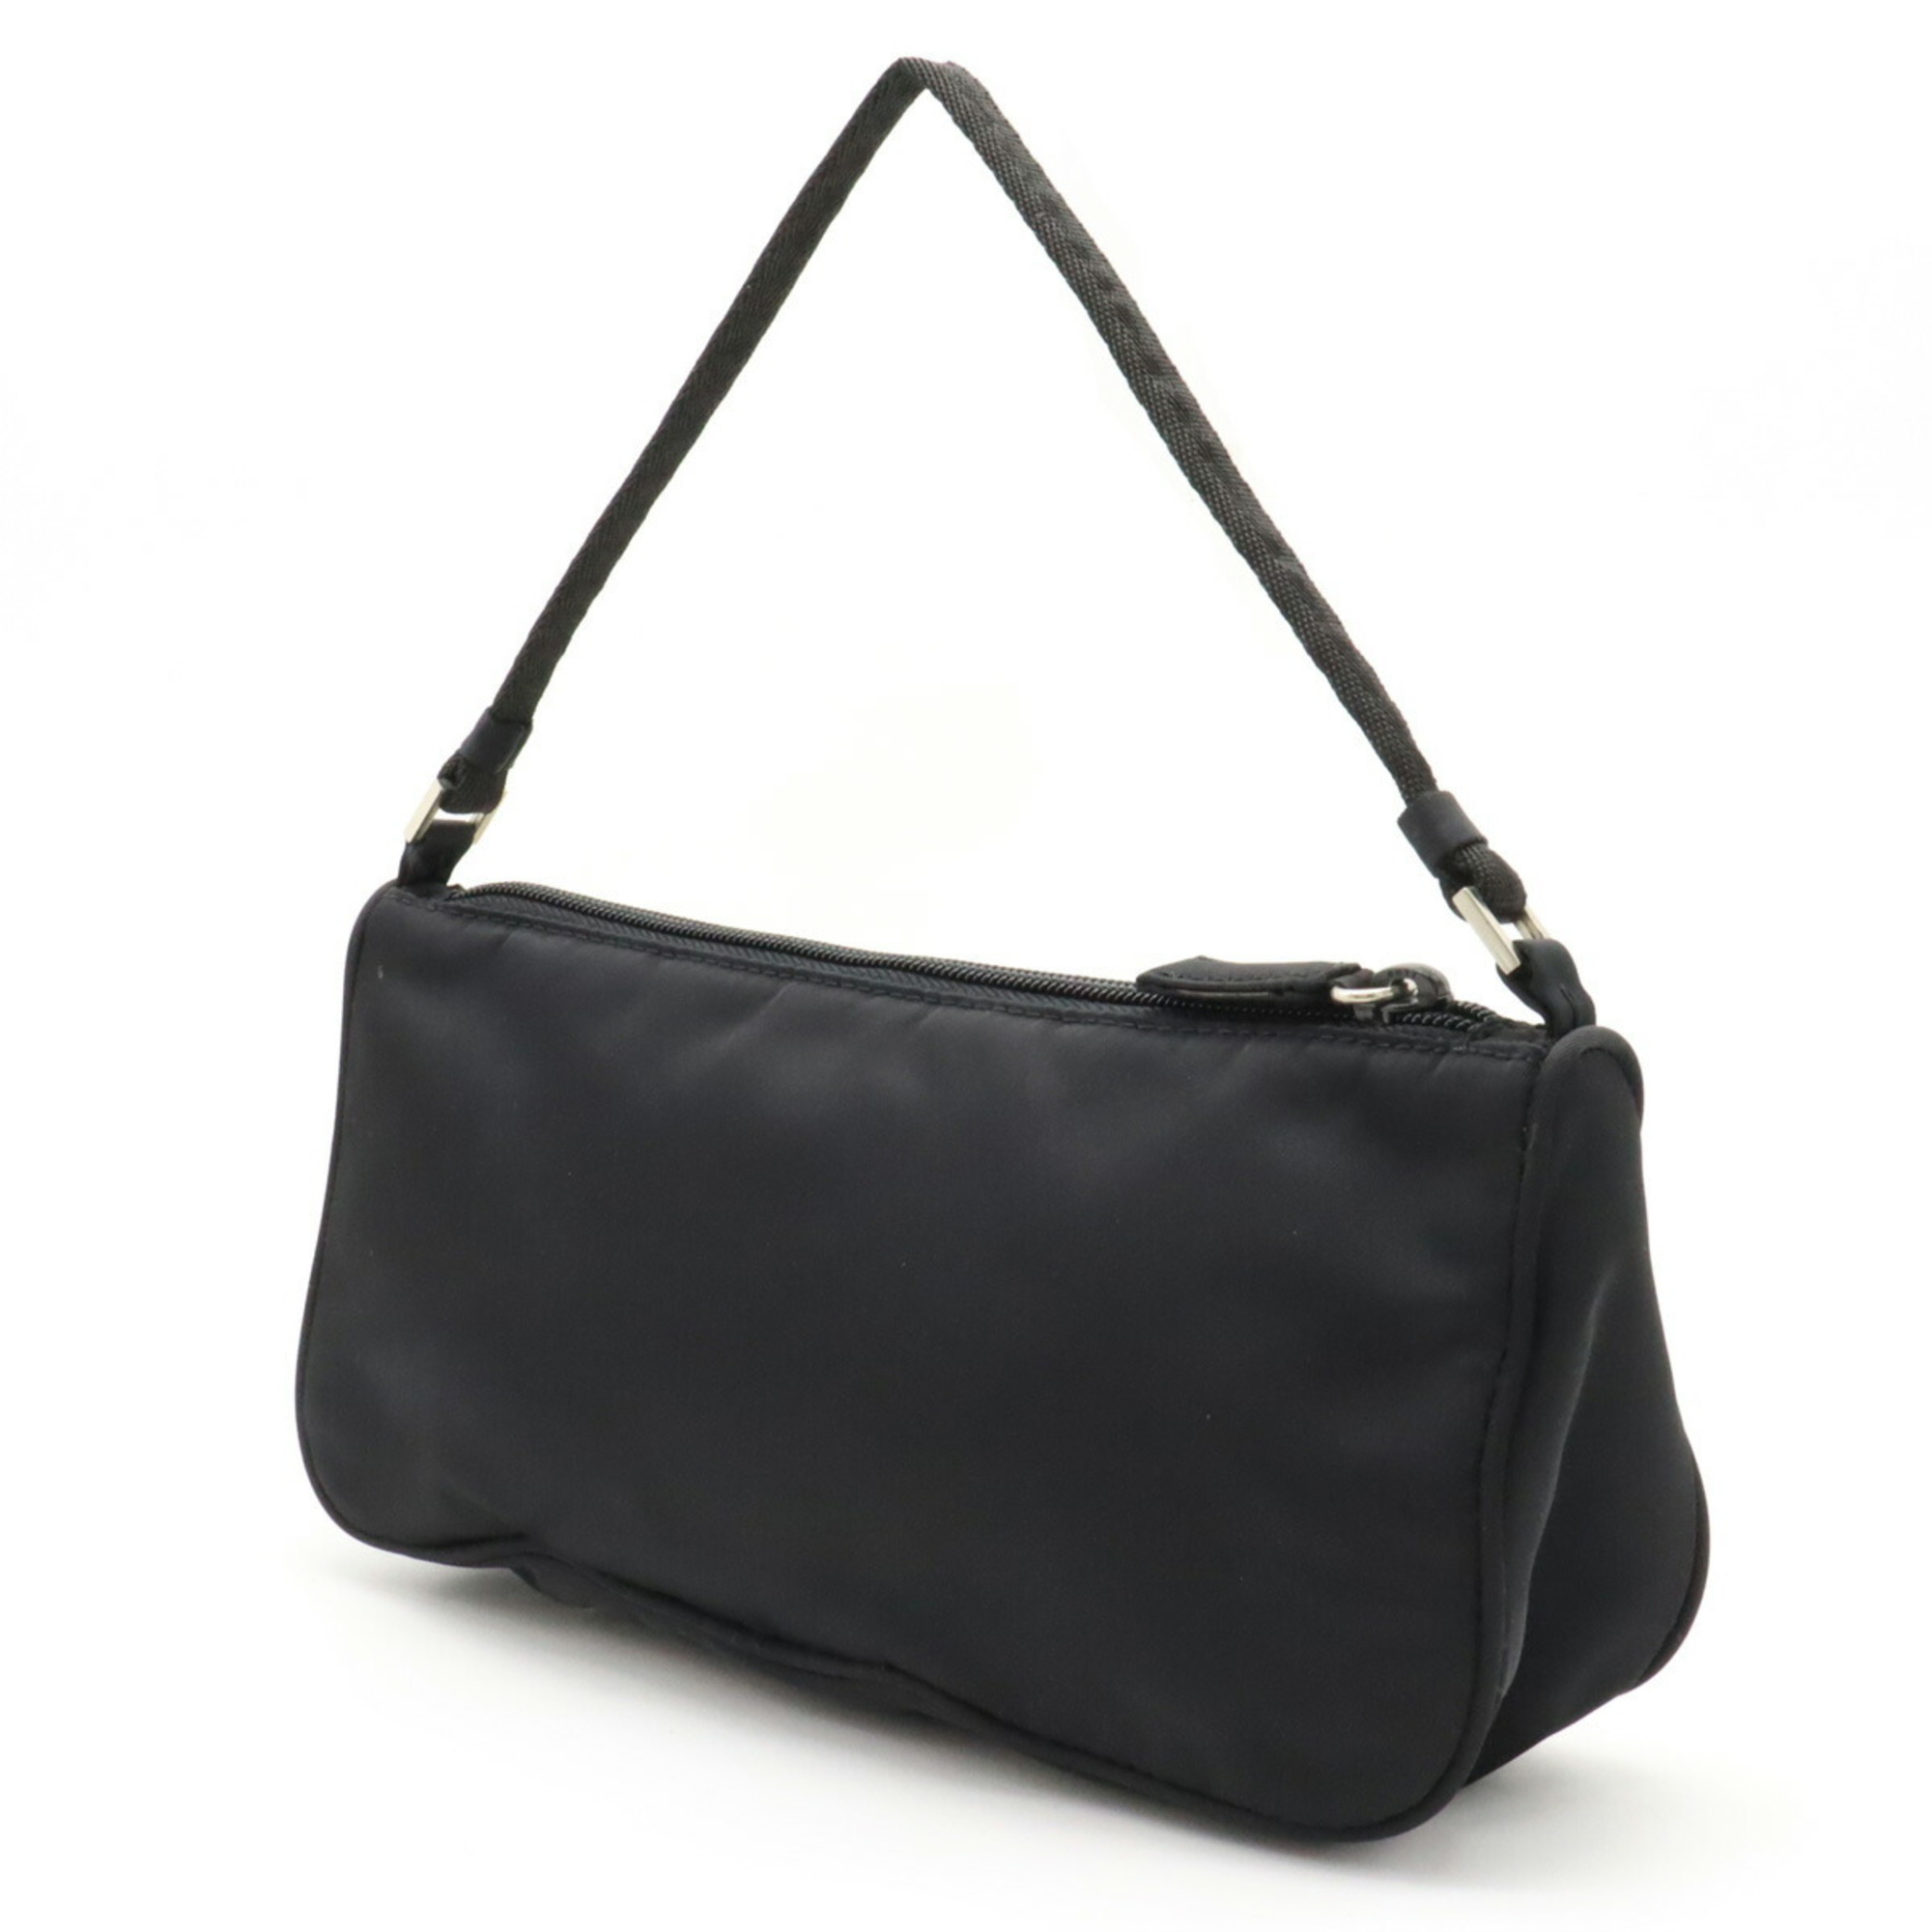 PRADA Prada Pouch Handbag - Bag Nylon NERO Black MV633